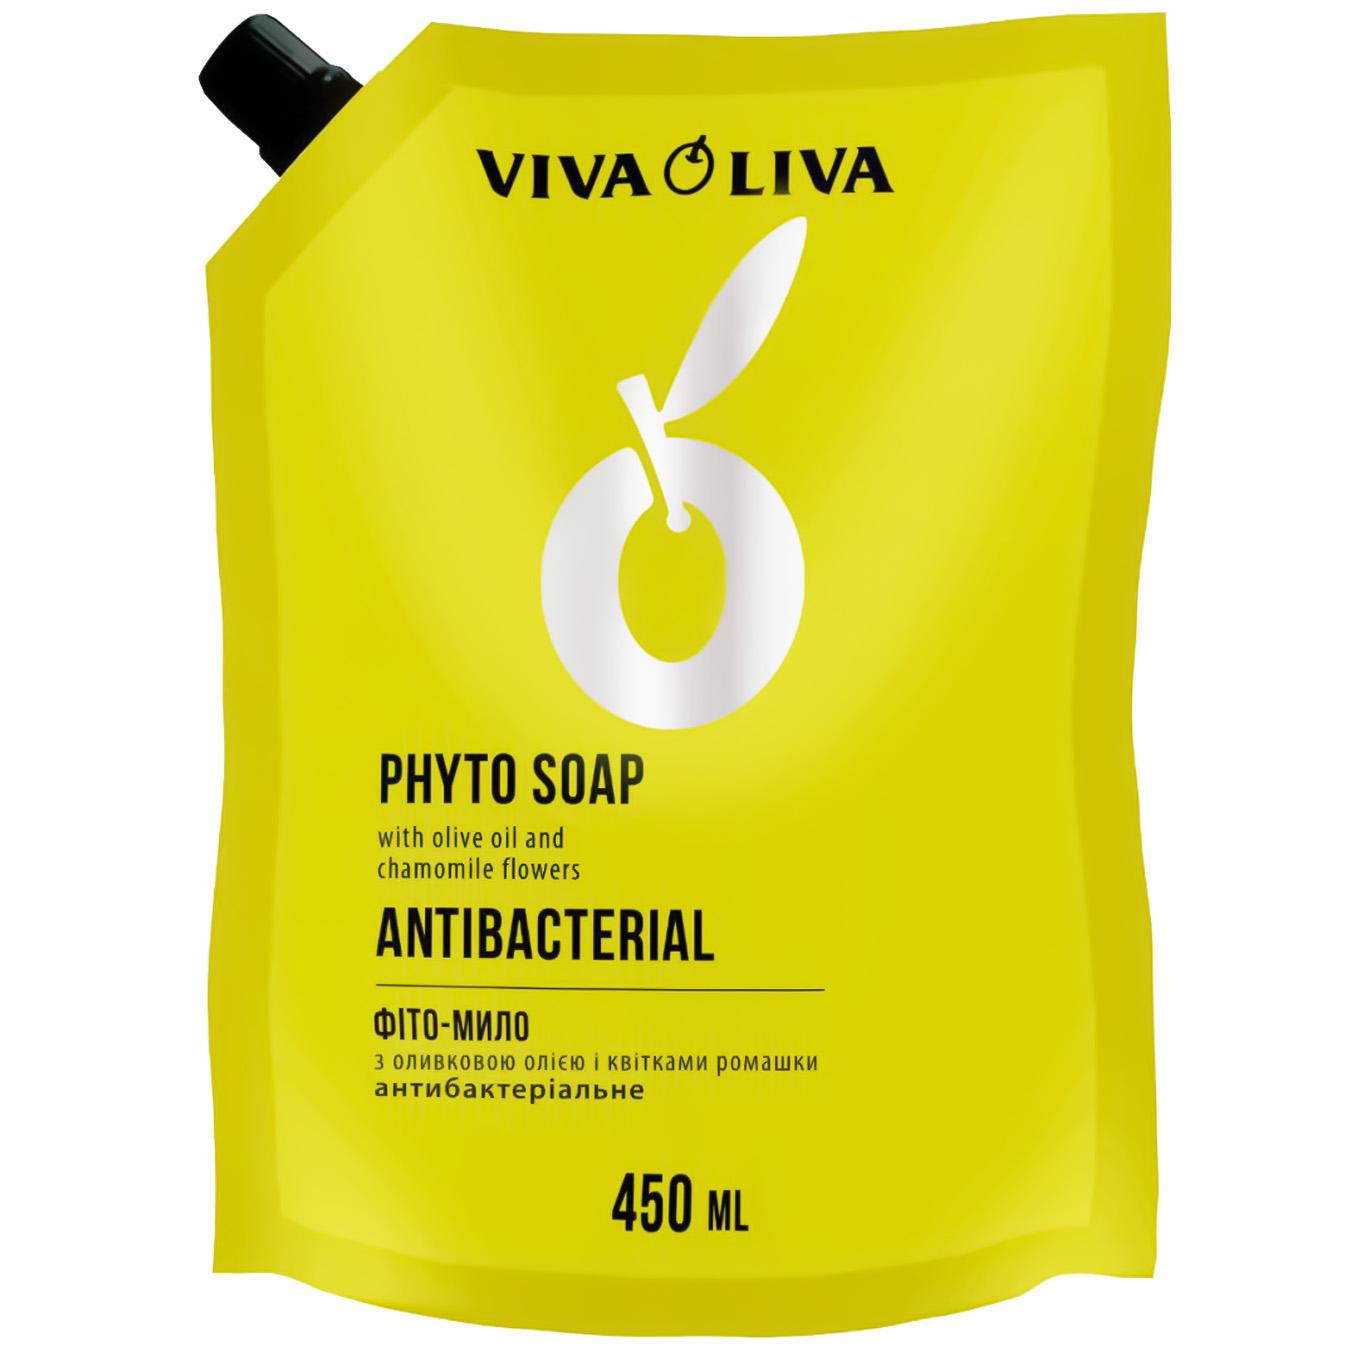 Phyto-soap Viva oliva duo-pack liquid antibacterial 450 ml